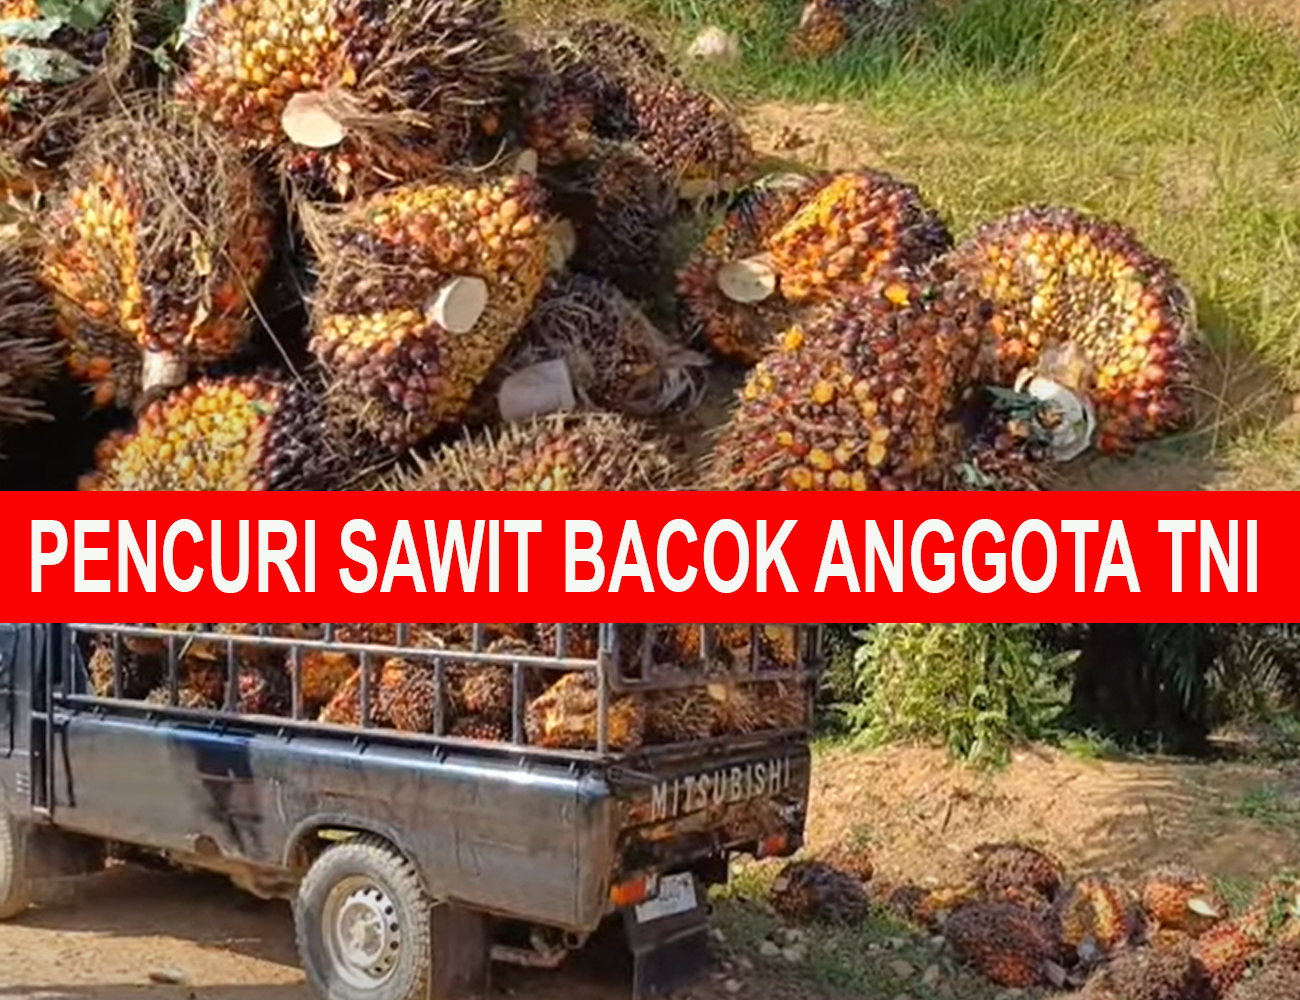 Sadis, Maling Buah Sawit Berani Bacok dan Culik Anggota TNI di Empat Lawang Sumatera Selatan